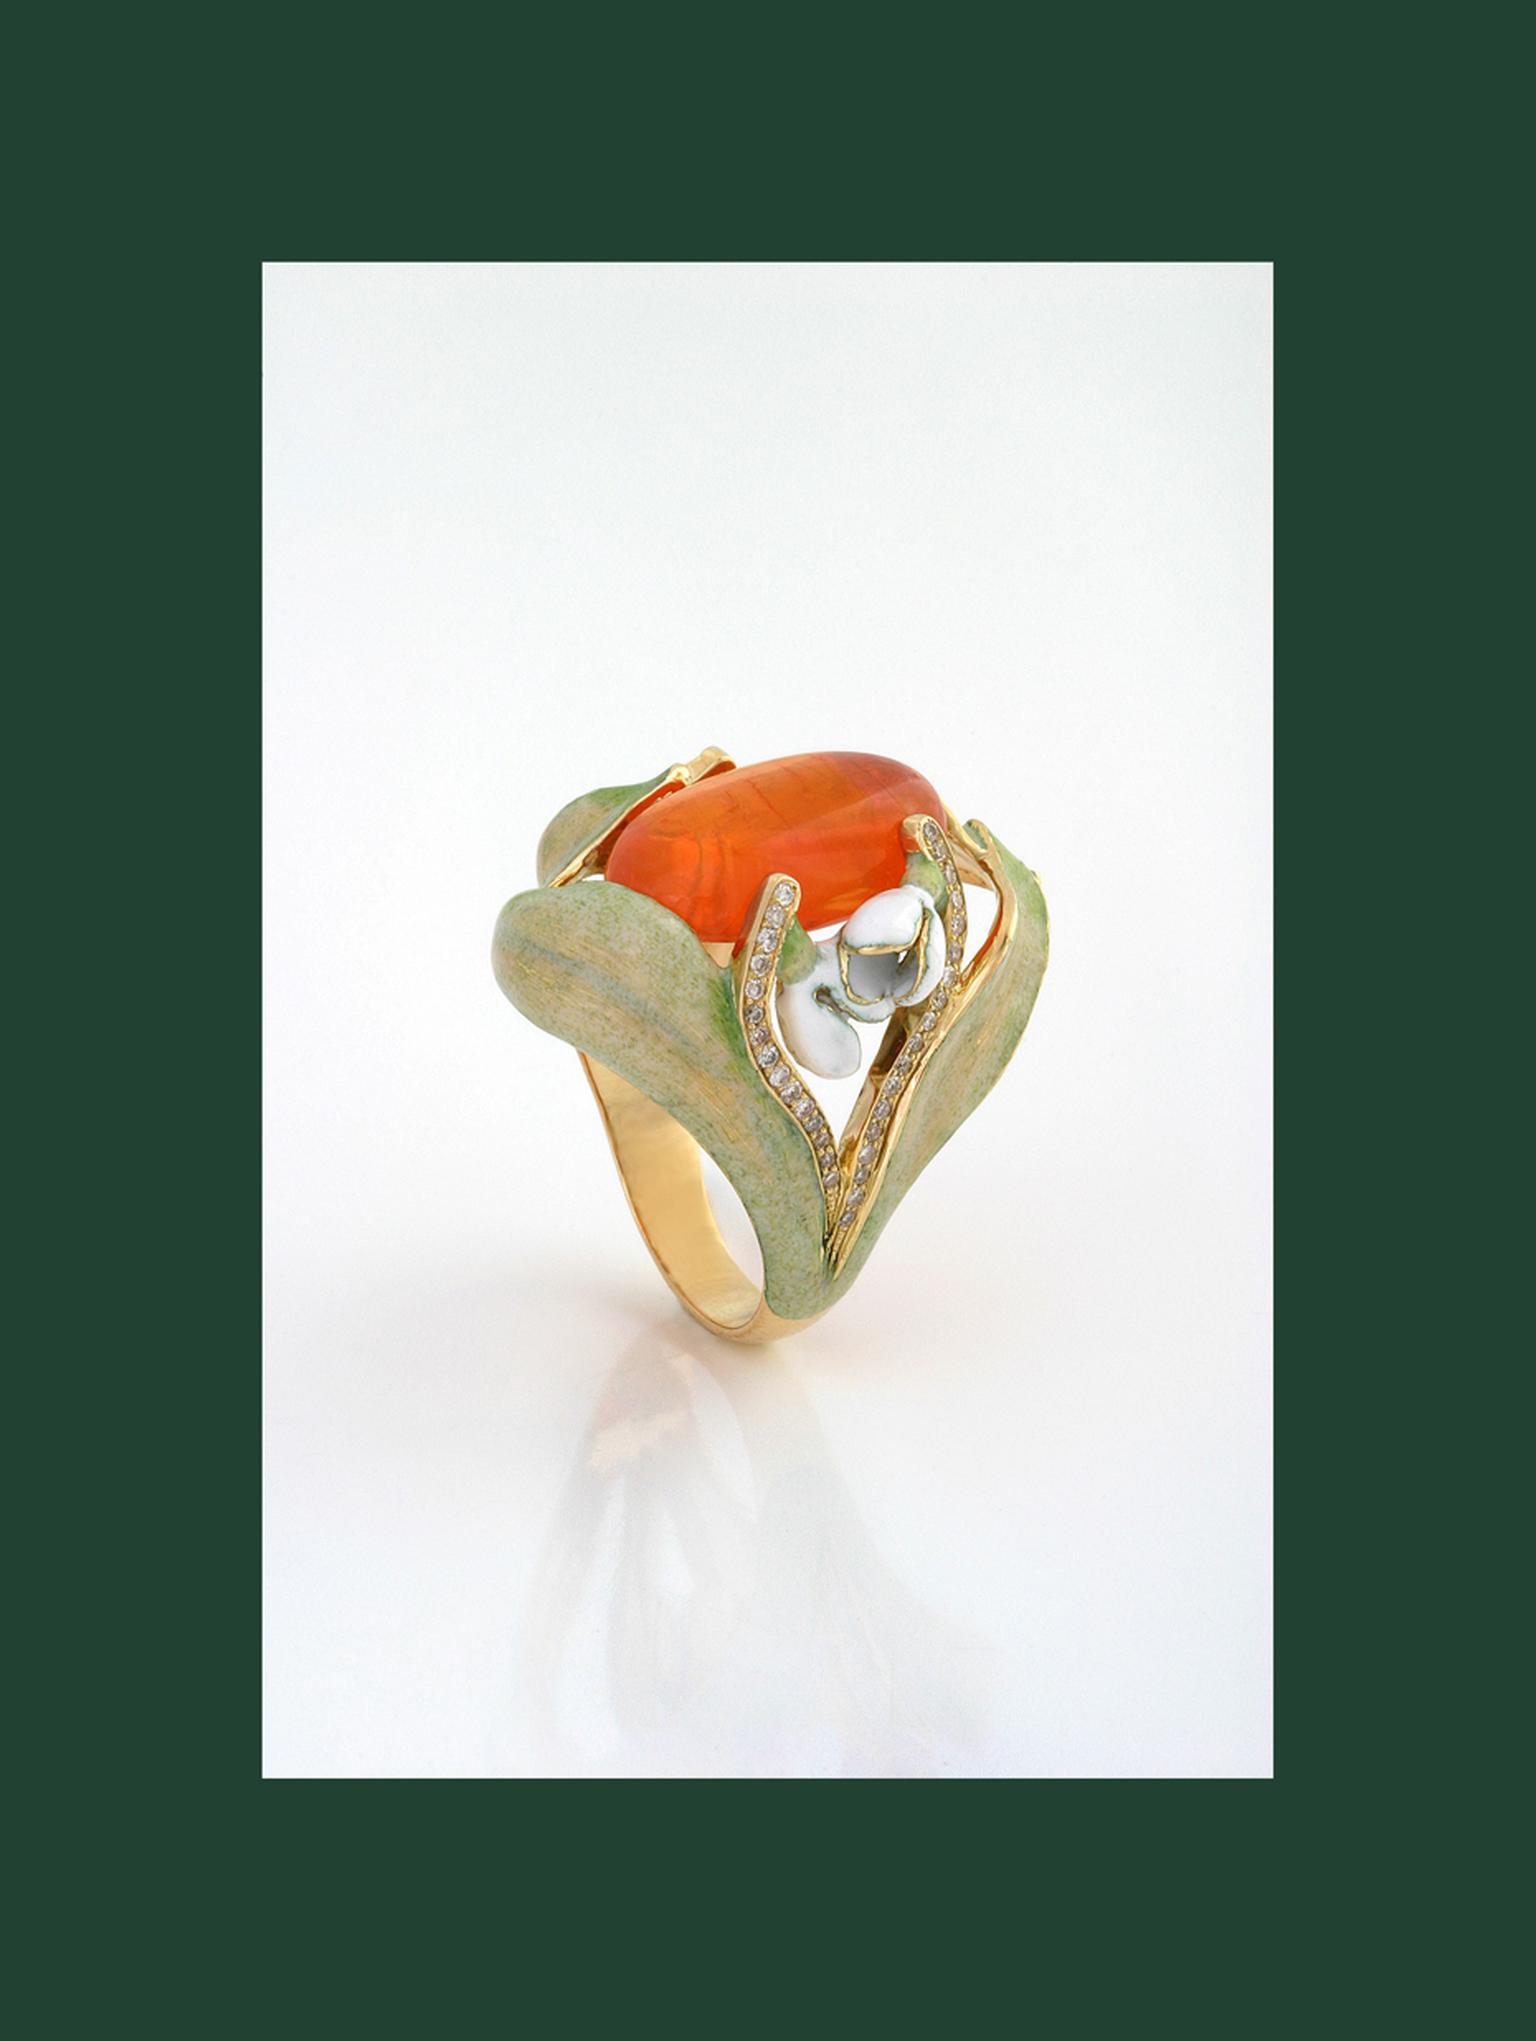 Ilgiz F Snowdrop ring with opal.